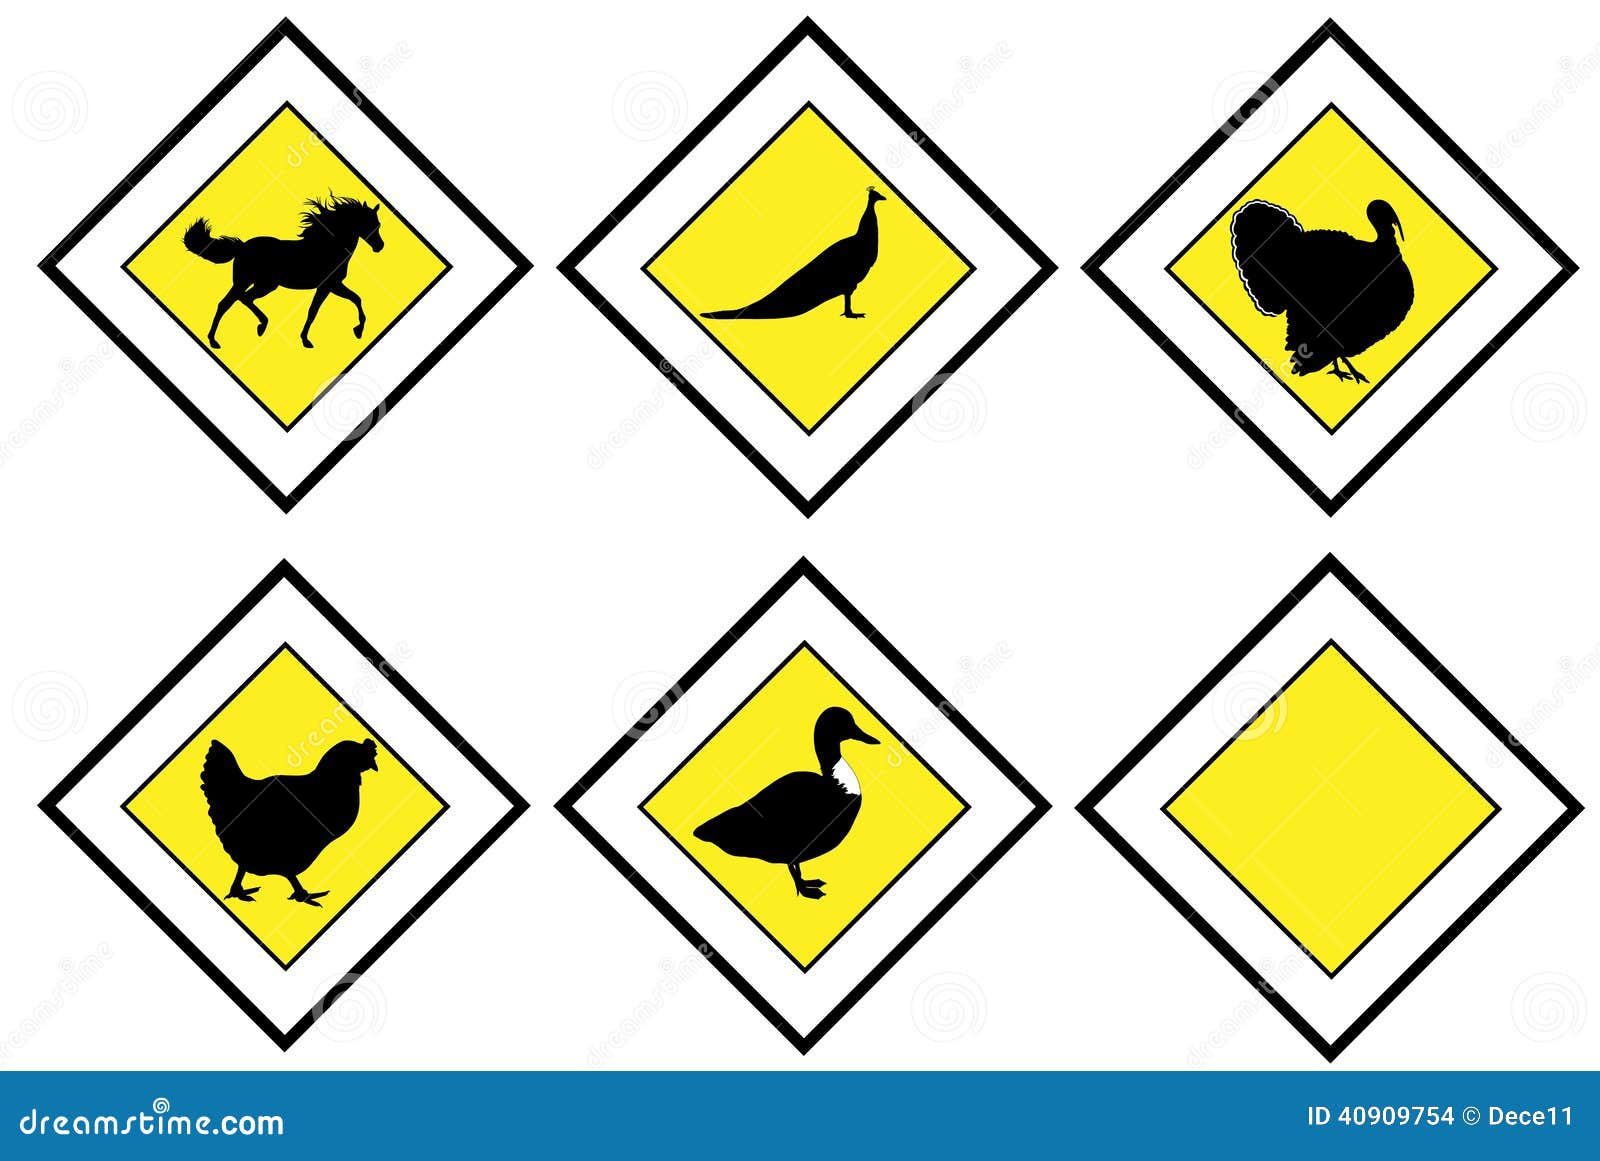 Знак с утками. Желтый знак. Животные. Животные знаки на квадрате. Жёлтые треугольные знаки с животными. Знаки животных на мелкомасштабных картах.